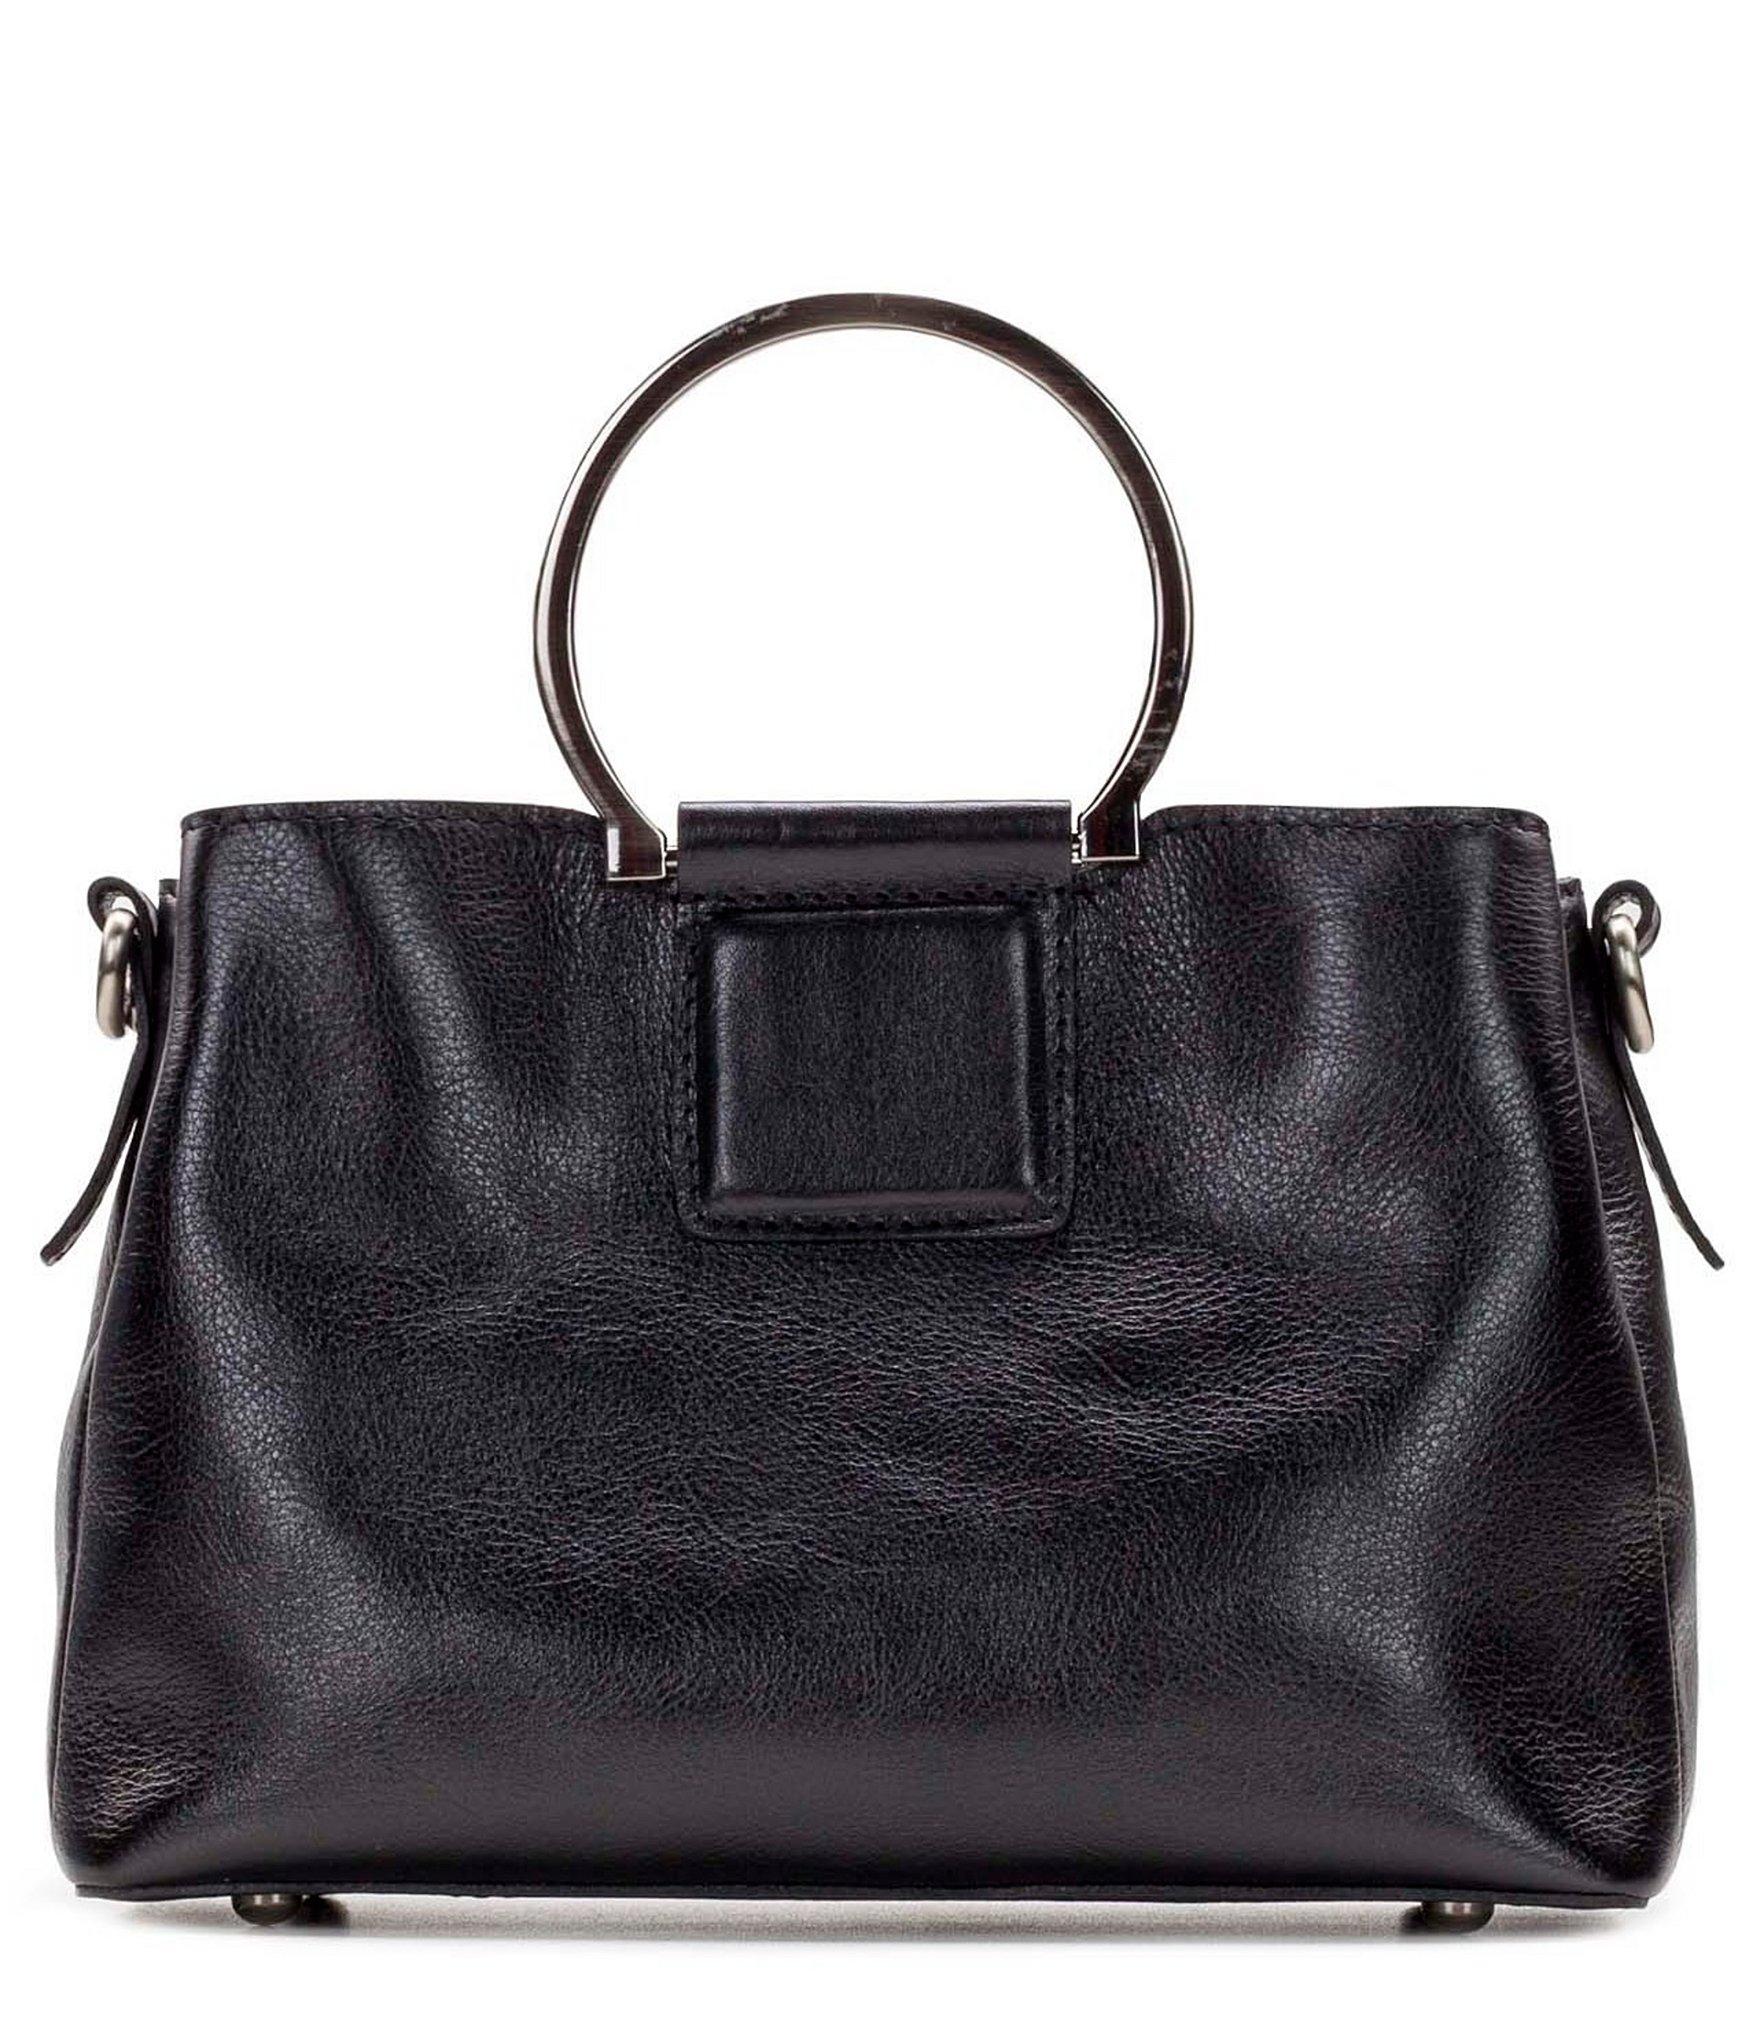 Patricia Nash Empoli Ring Handle Leather Satchel Bag in Black/Gold ...